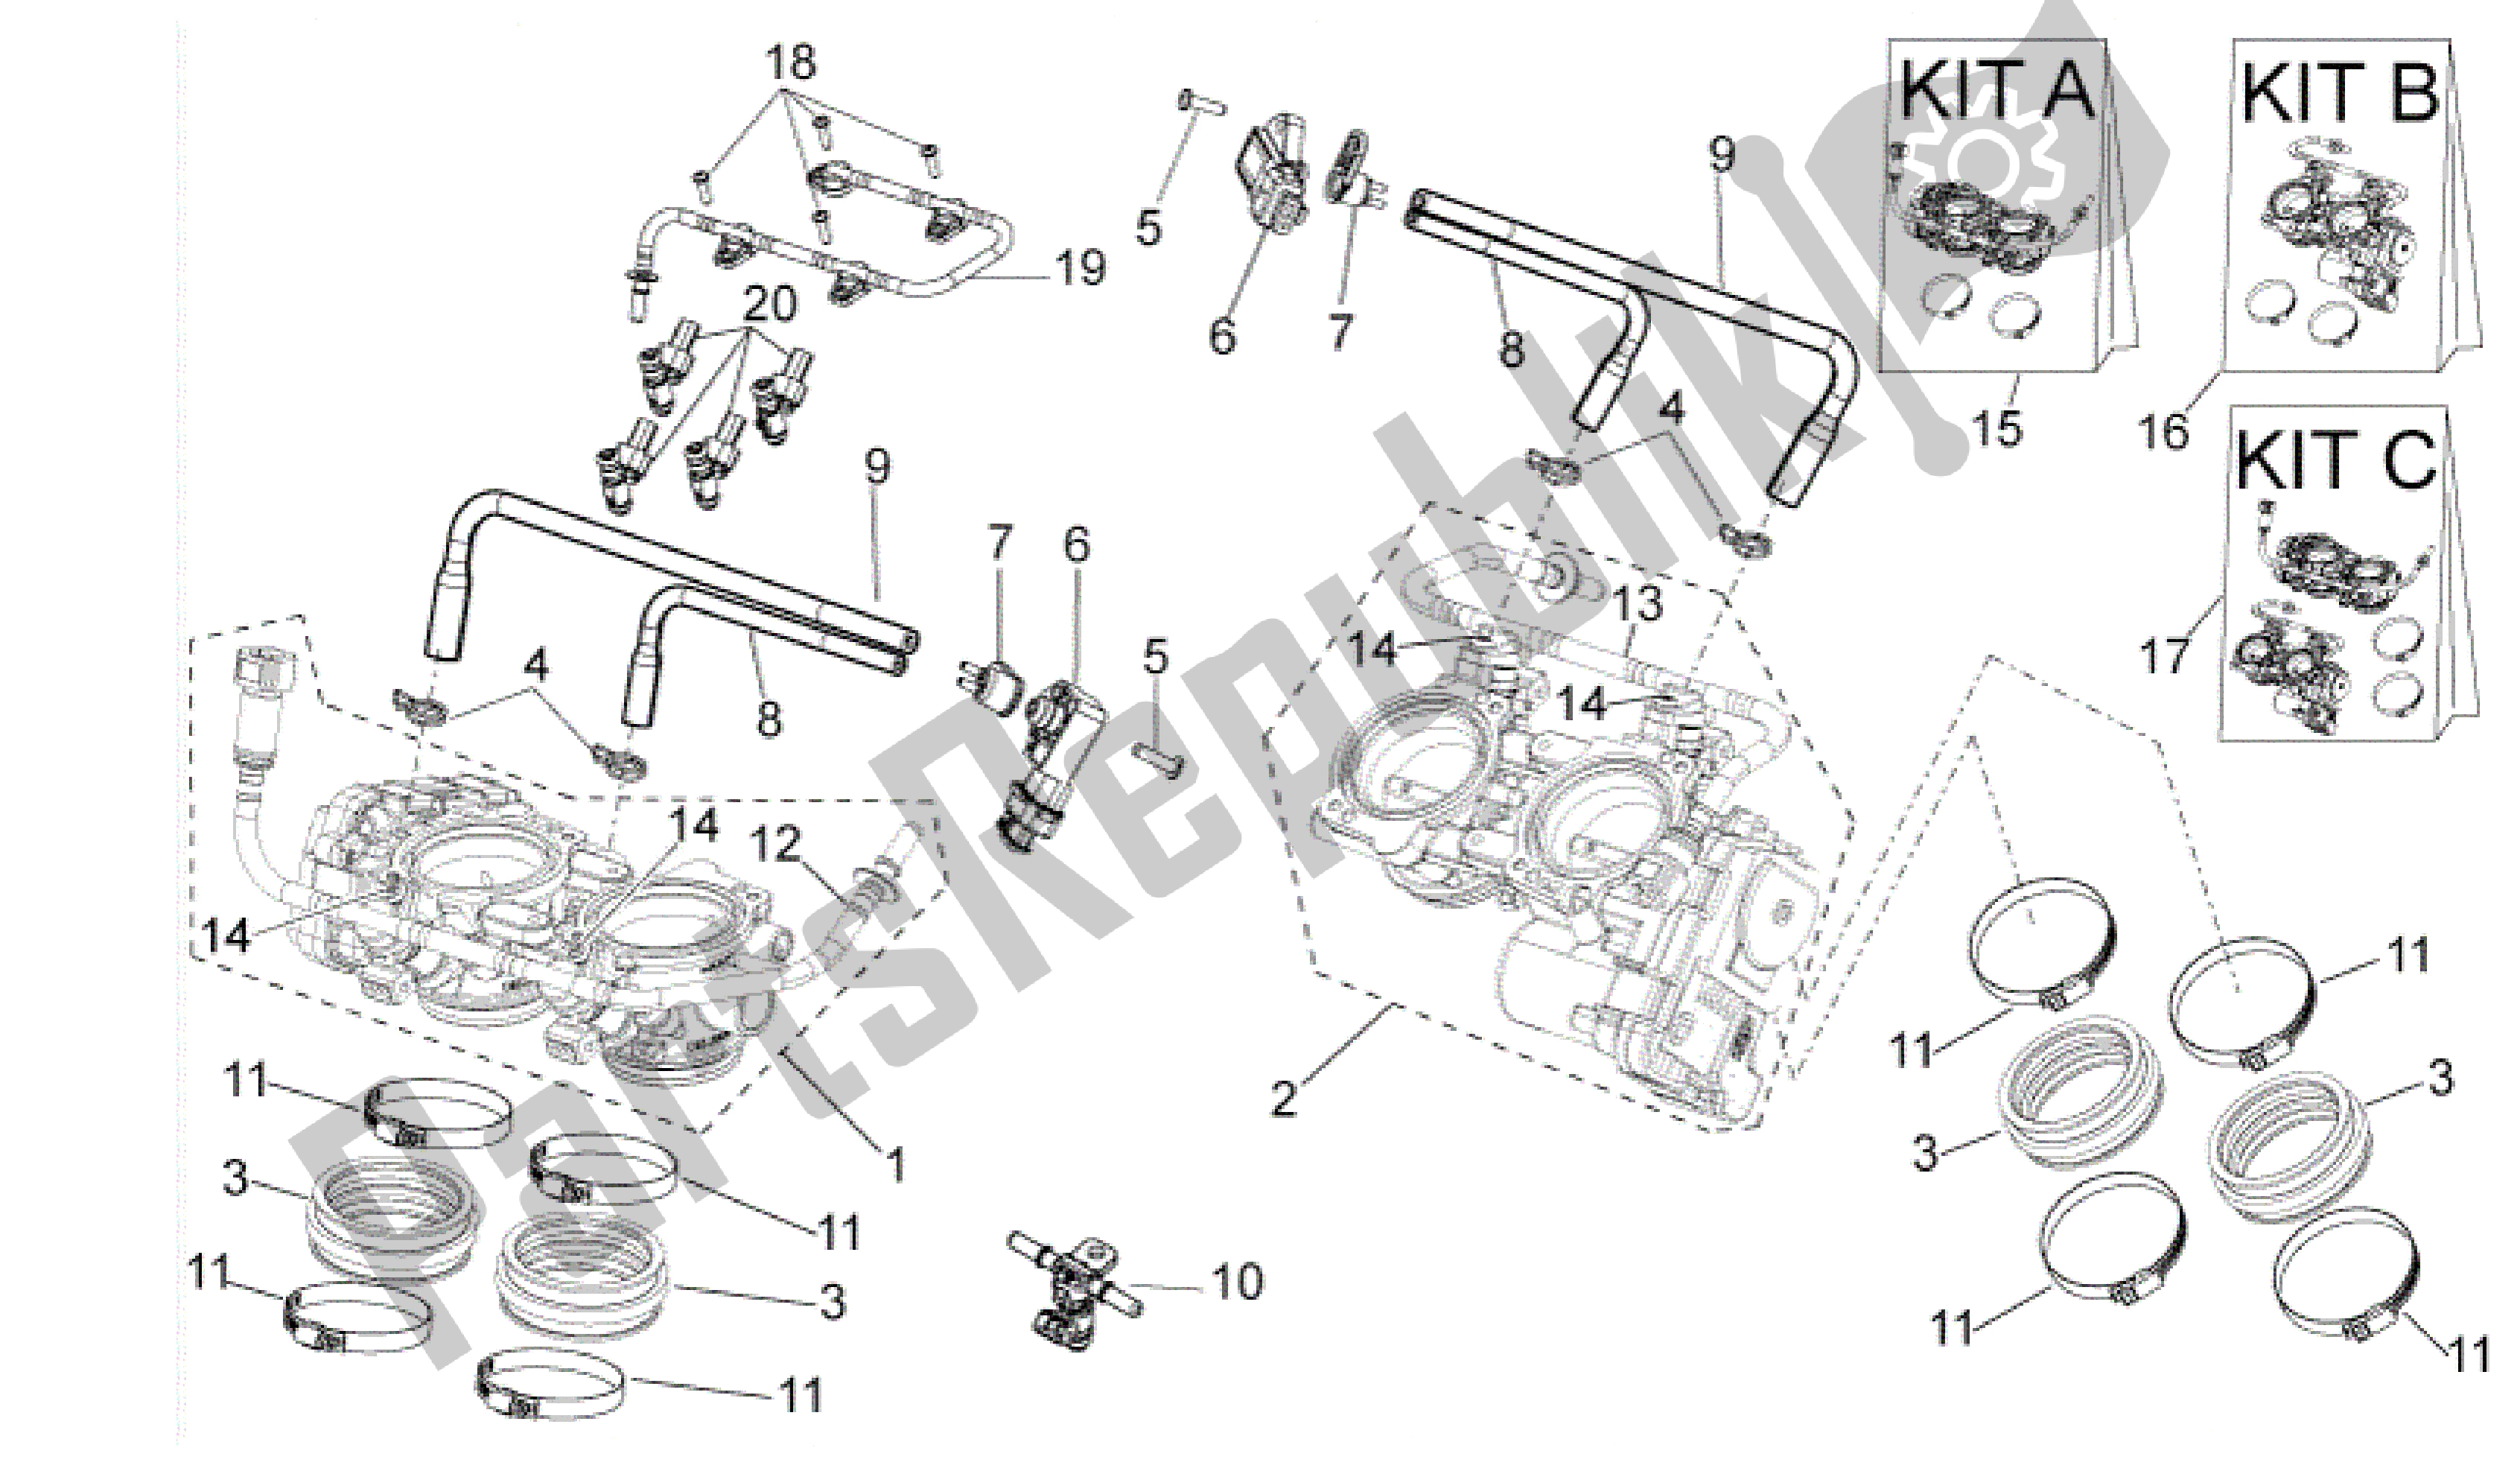 All parts for the Throttle Body of the Aprilia RSV4 Tuono V4 R Aprc ABS 1000 2014